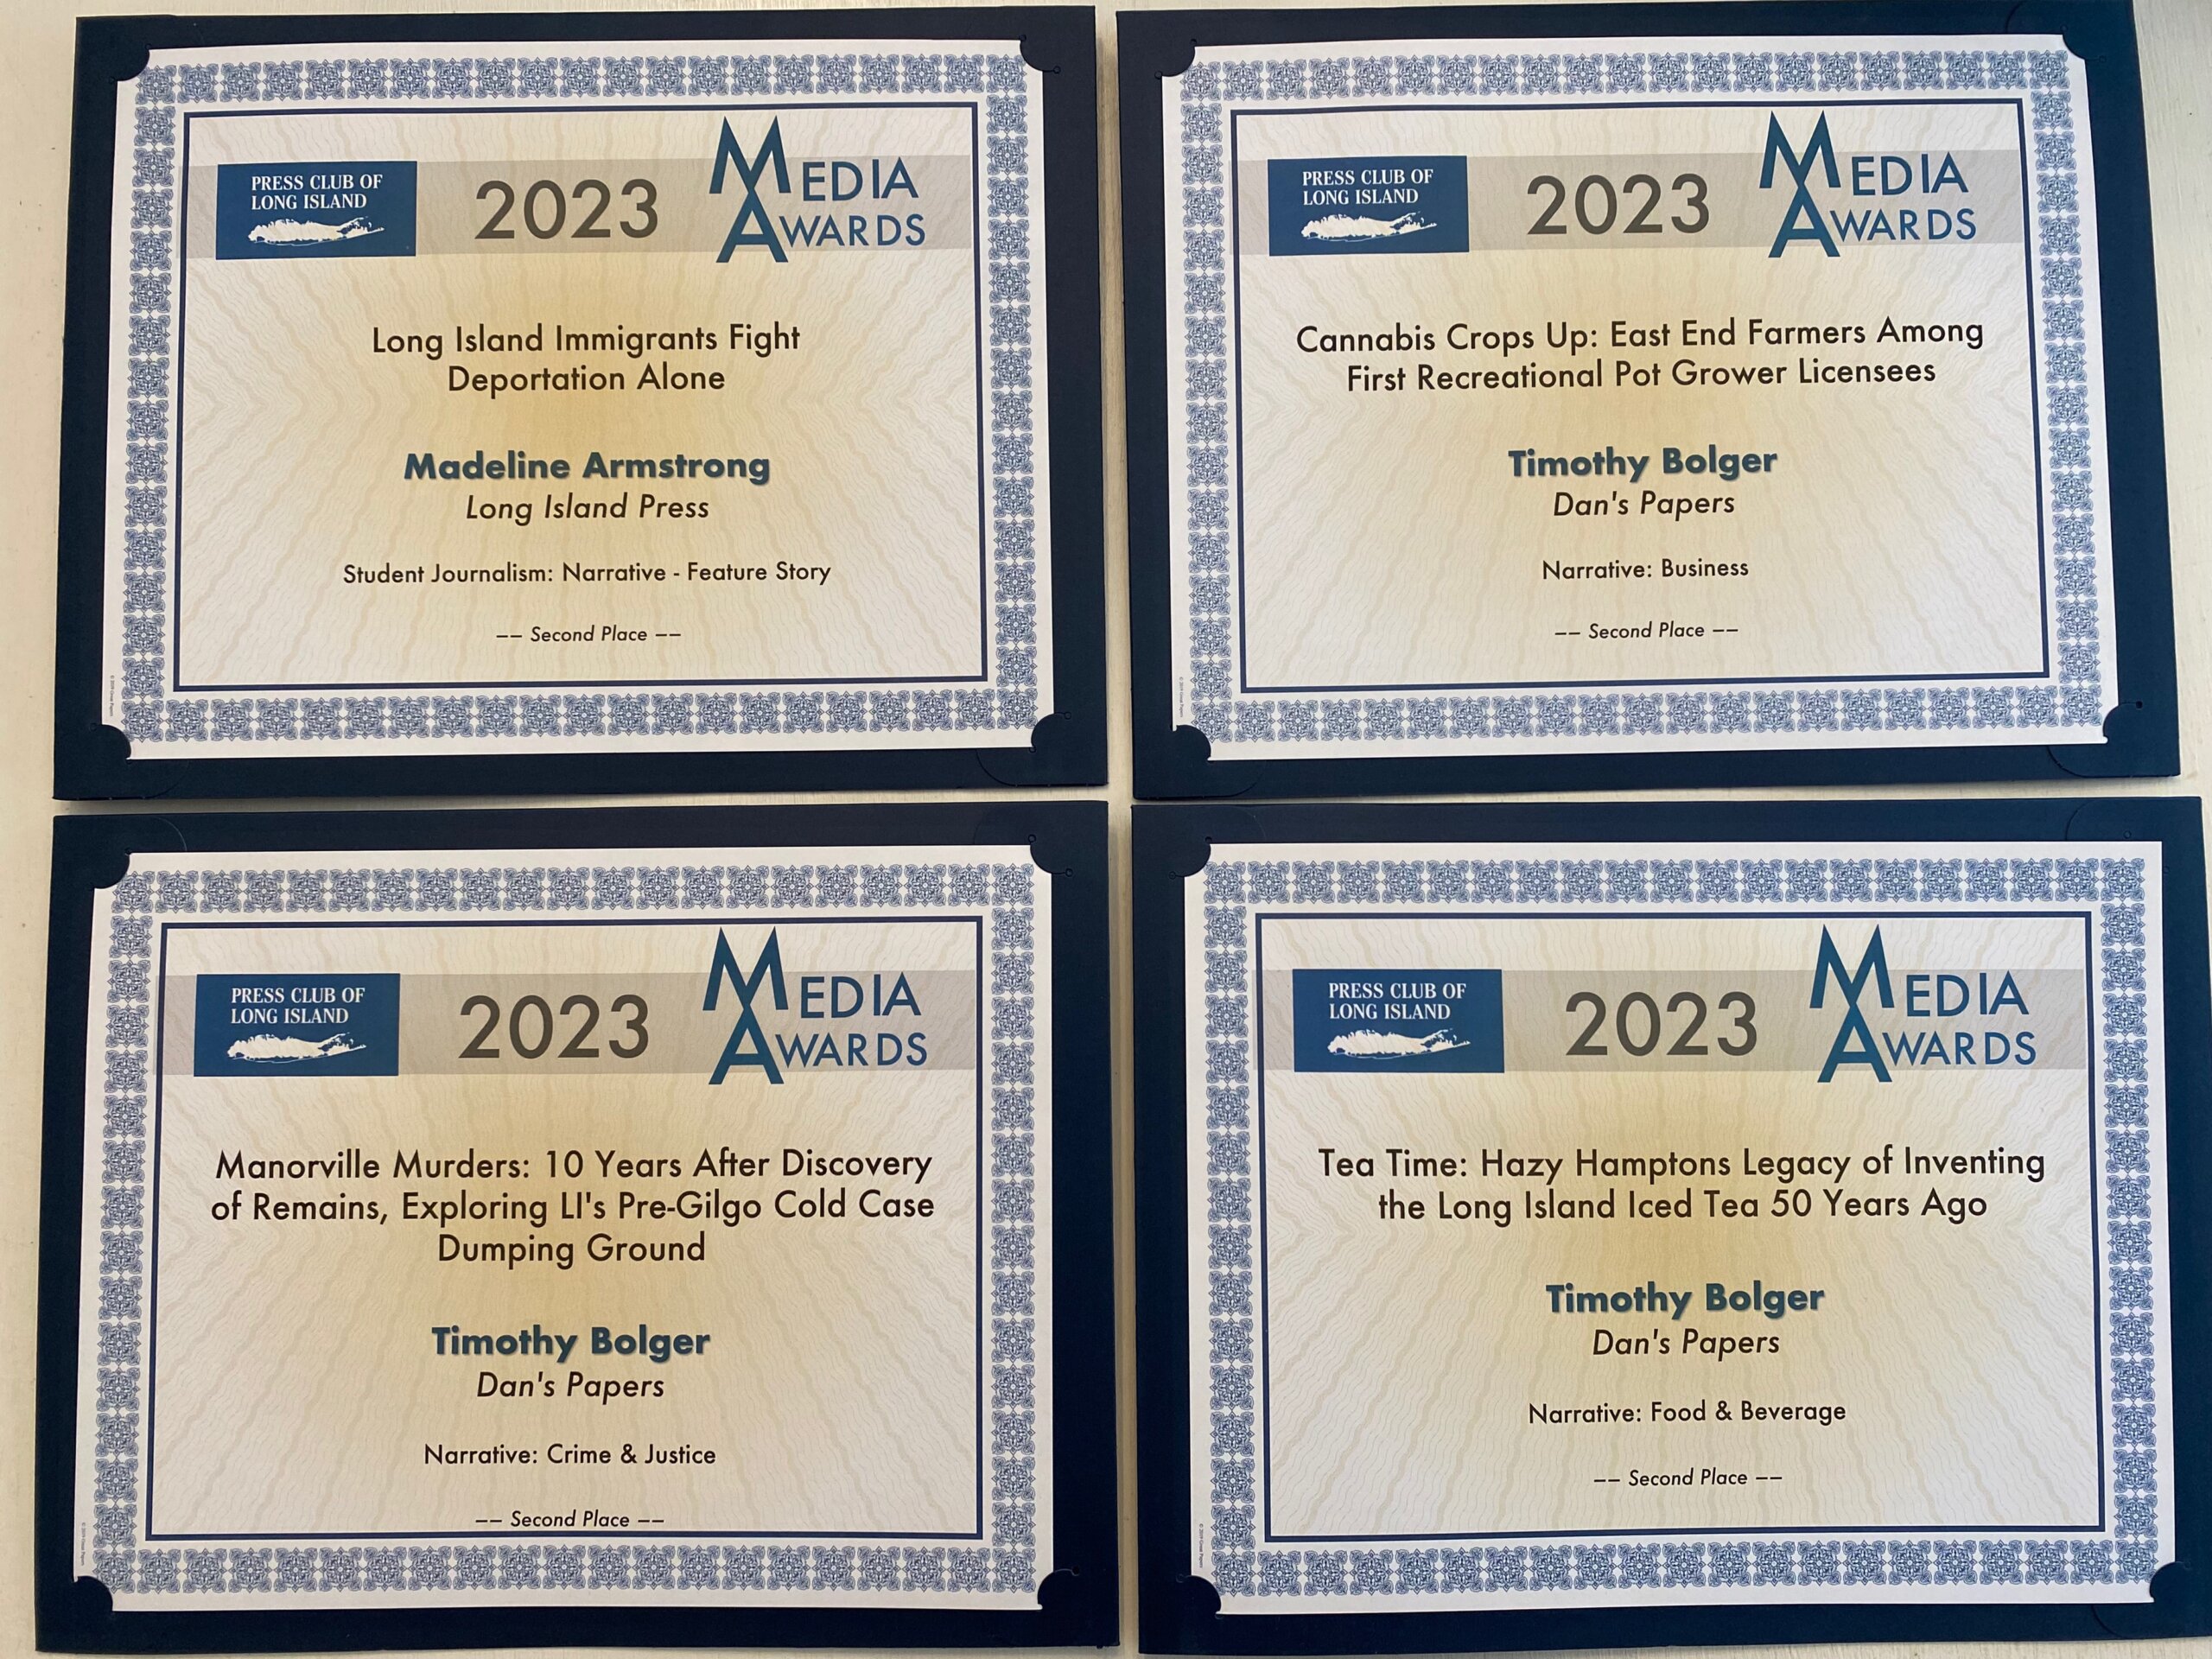 Dan's Papers (and Long Island Press) earned several Press Club of Long Island 2023 Media Awards